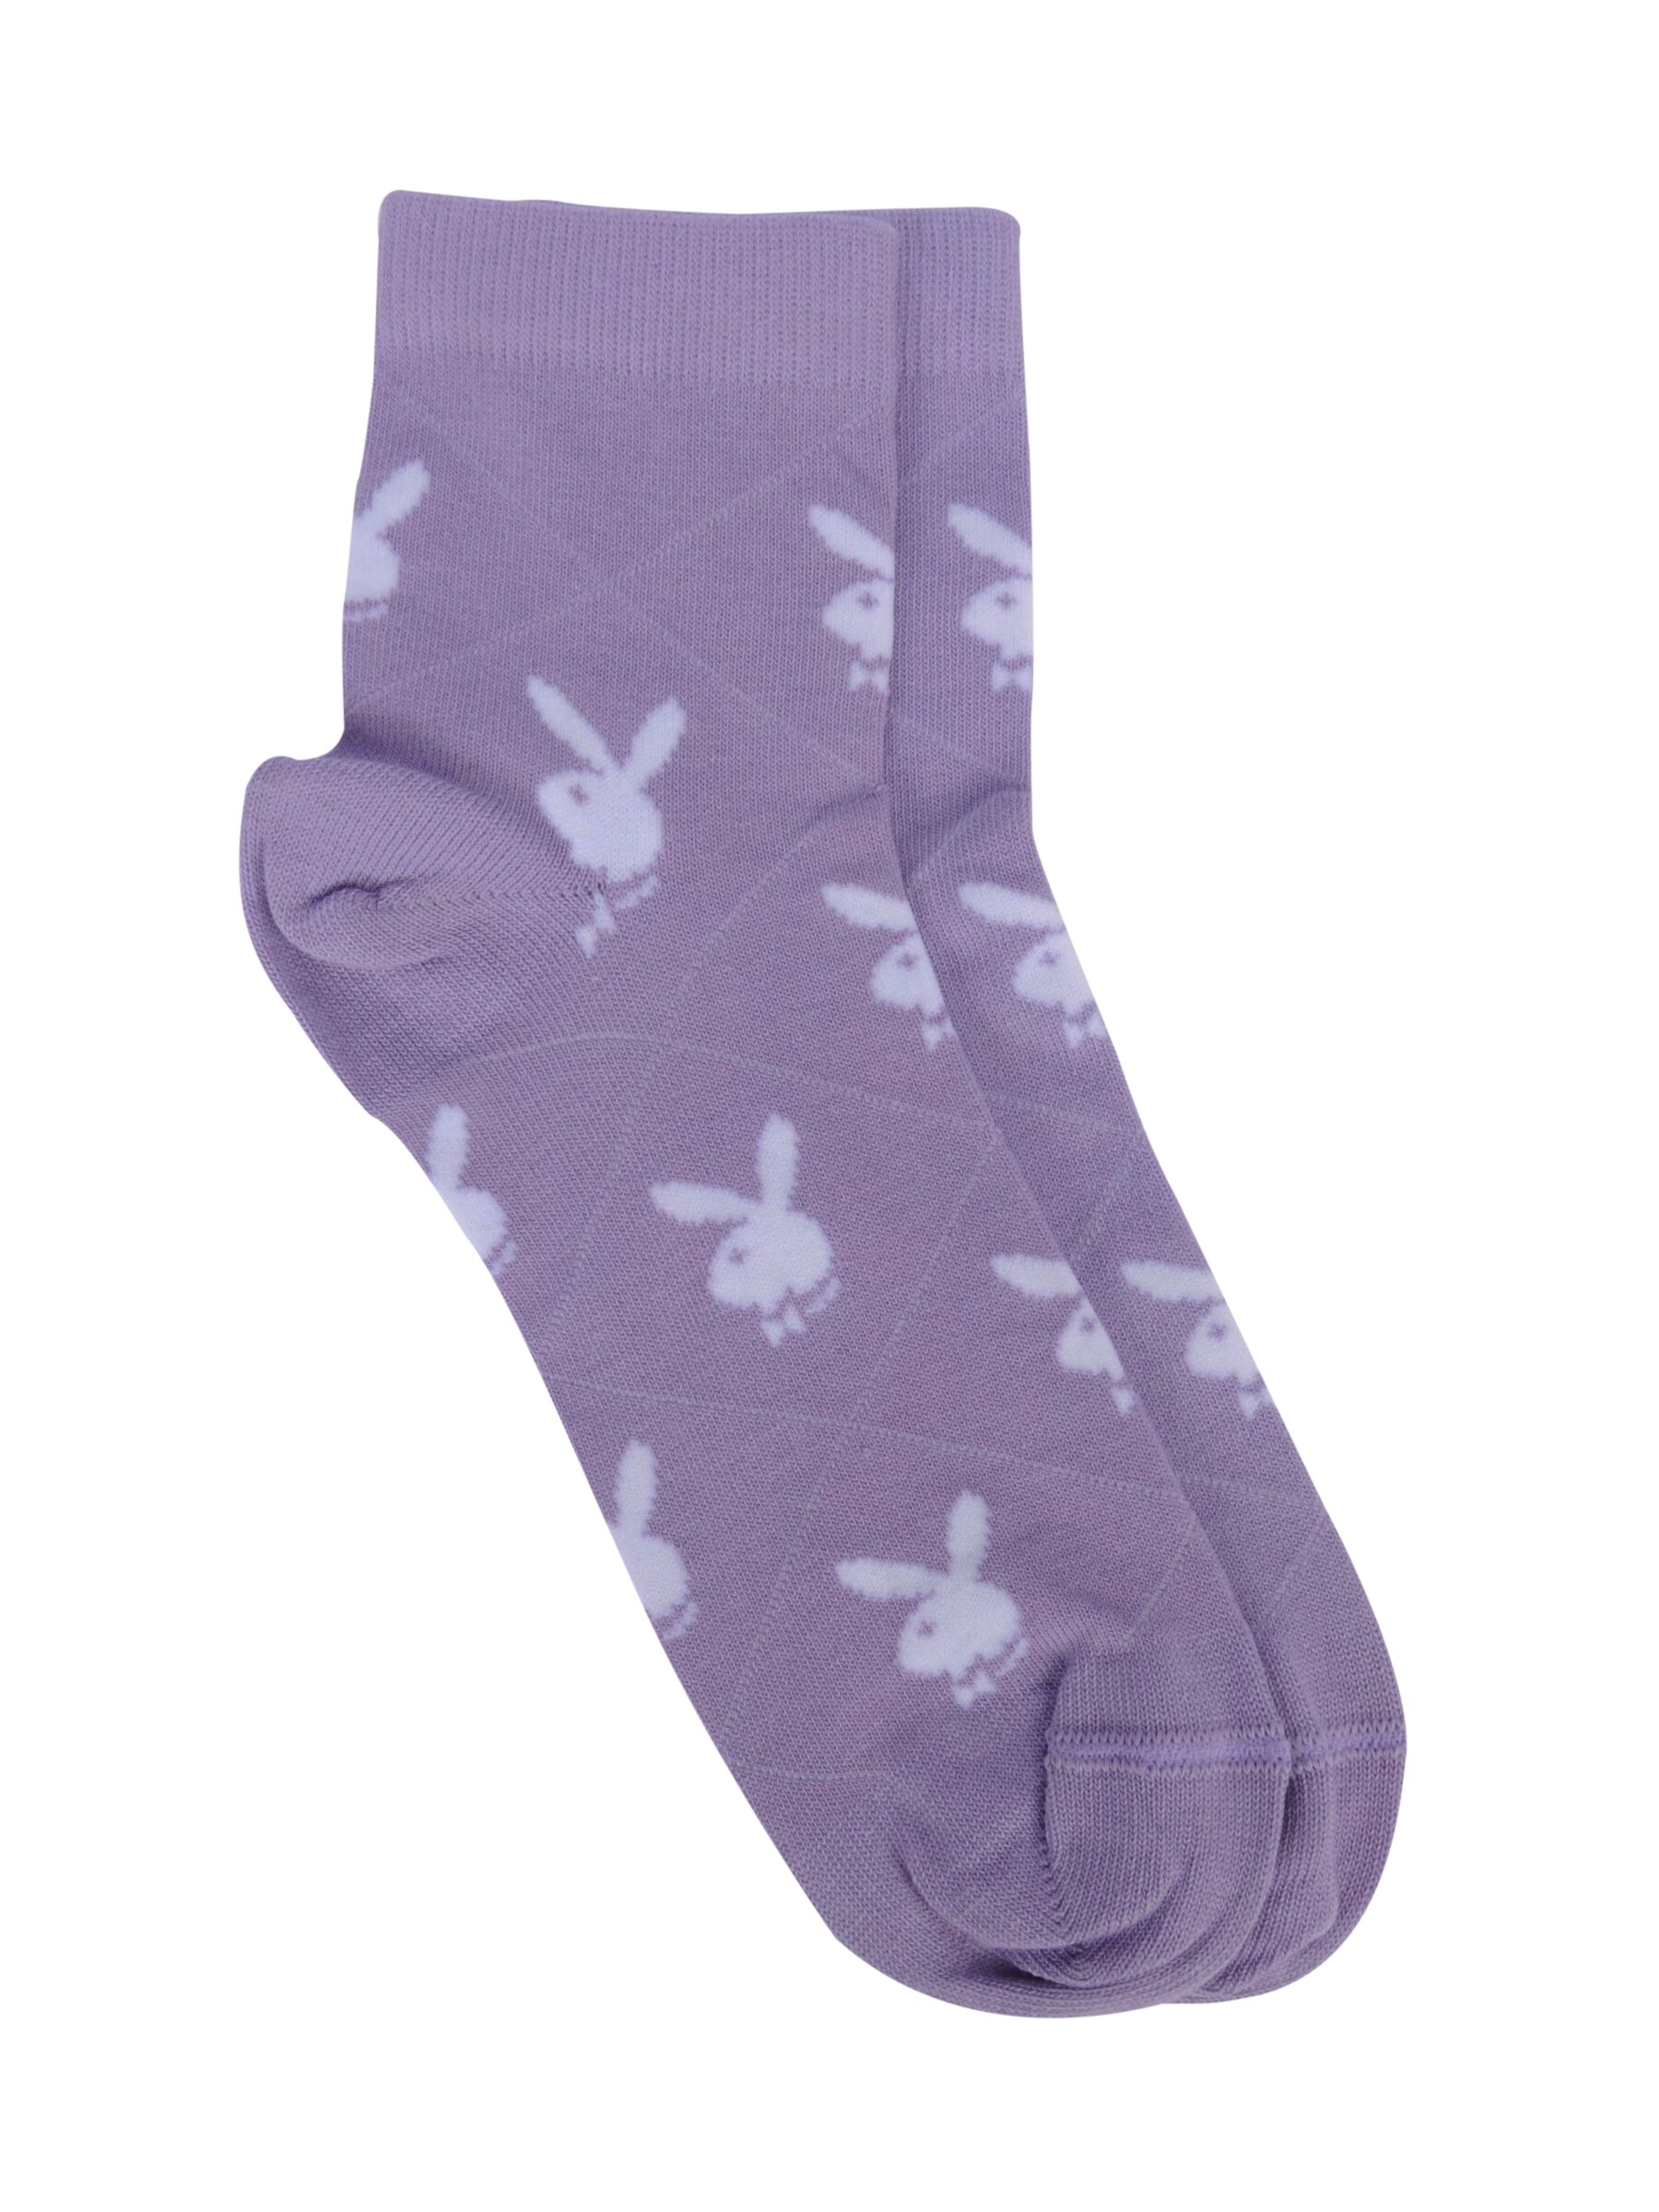 Playboy Women Playmate Lavender Ankle Socks